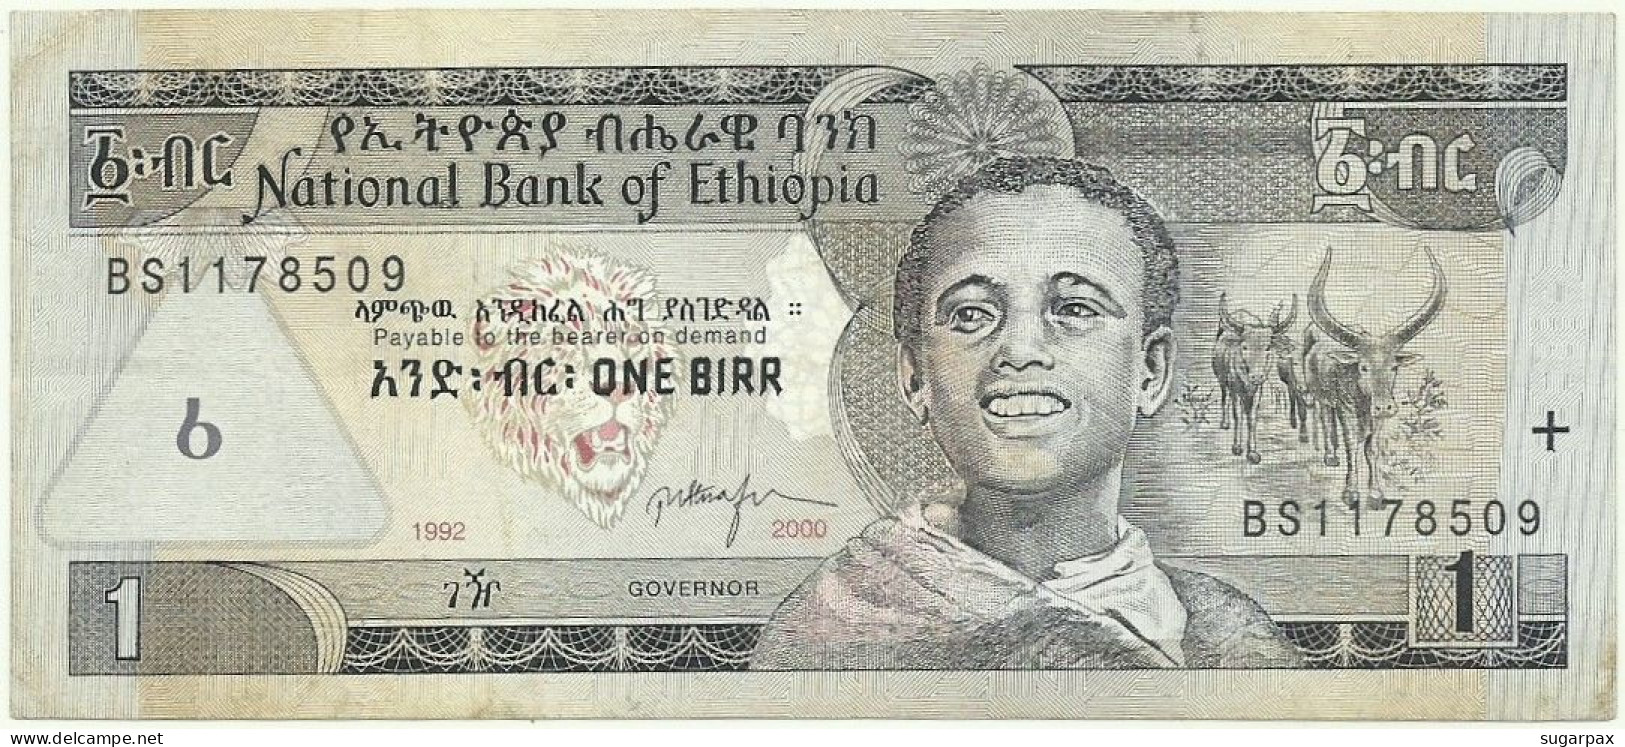 Ethiopia - 1 Birr - 2000 / EE 1992 - Pick 46.b - Unc. - Sign. 6 ( 1998 - ) - Serie BS - Aethiopien